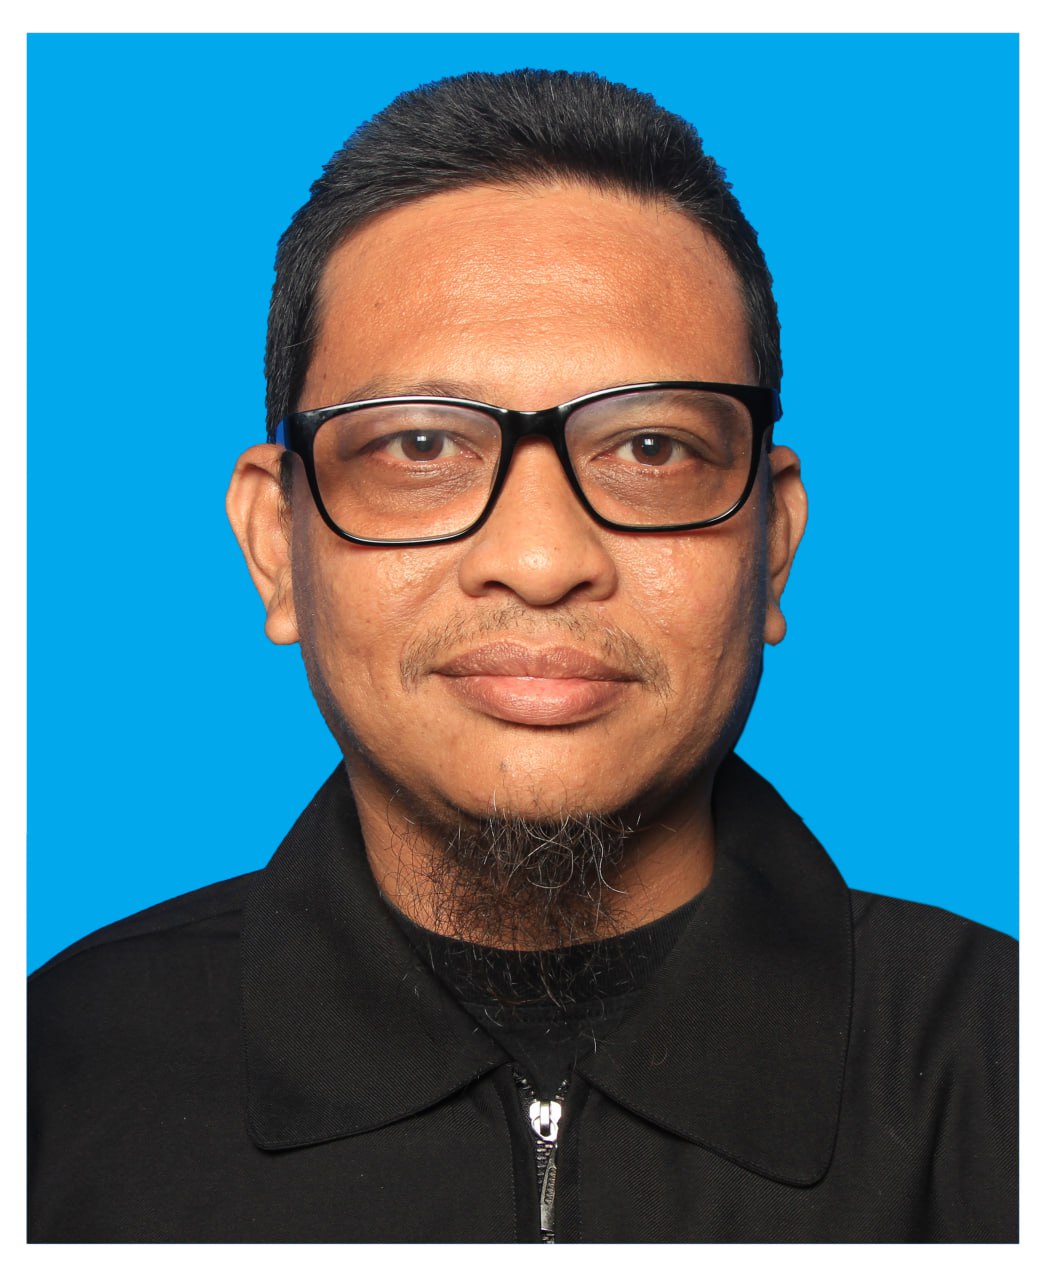 Mohd Shahril bin Mohd Yazid